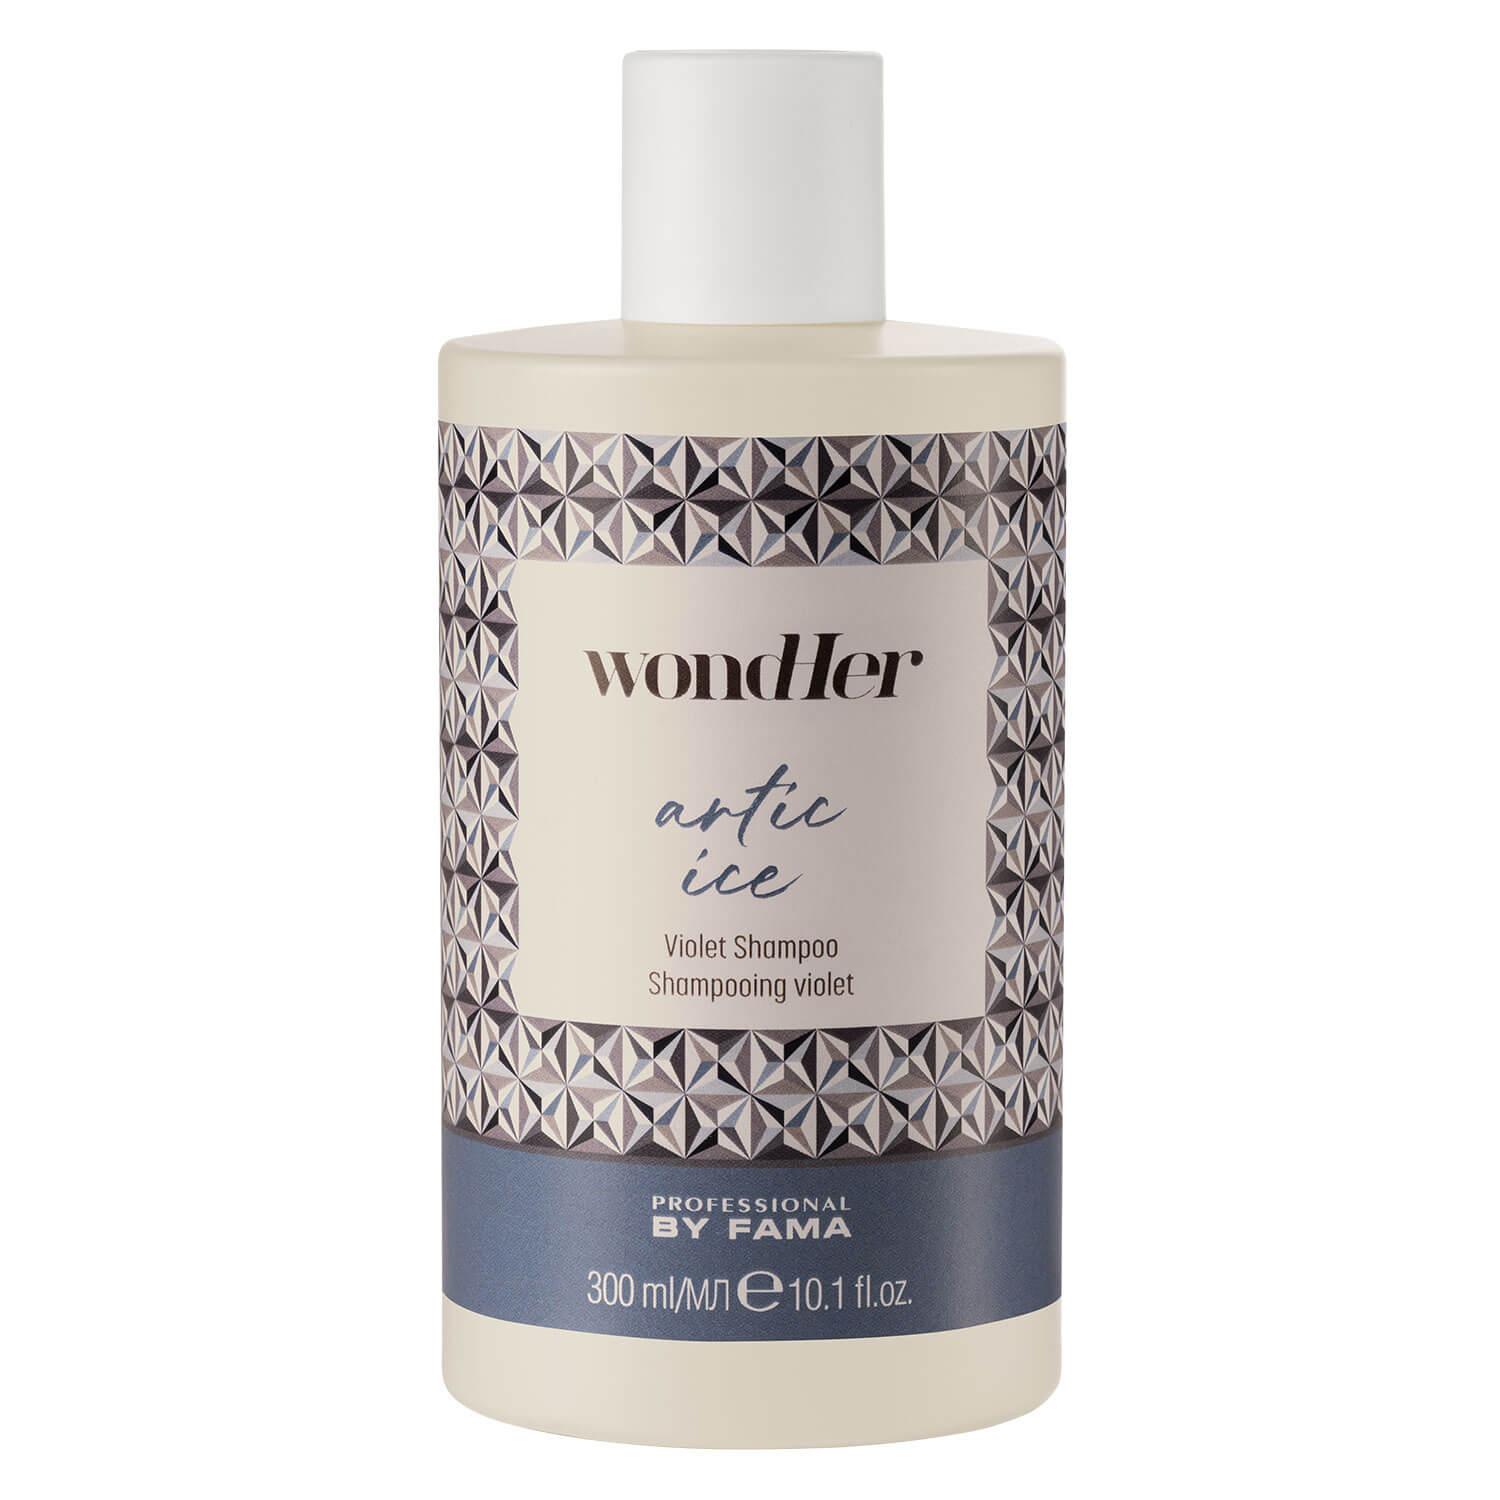 wondHer - Arctic Ice Violet Shampoo